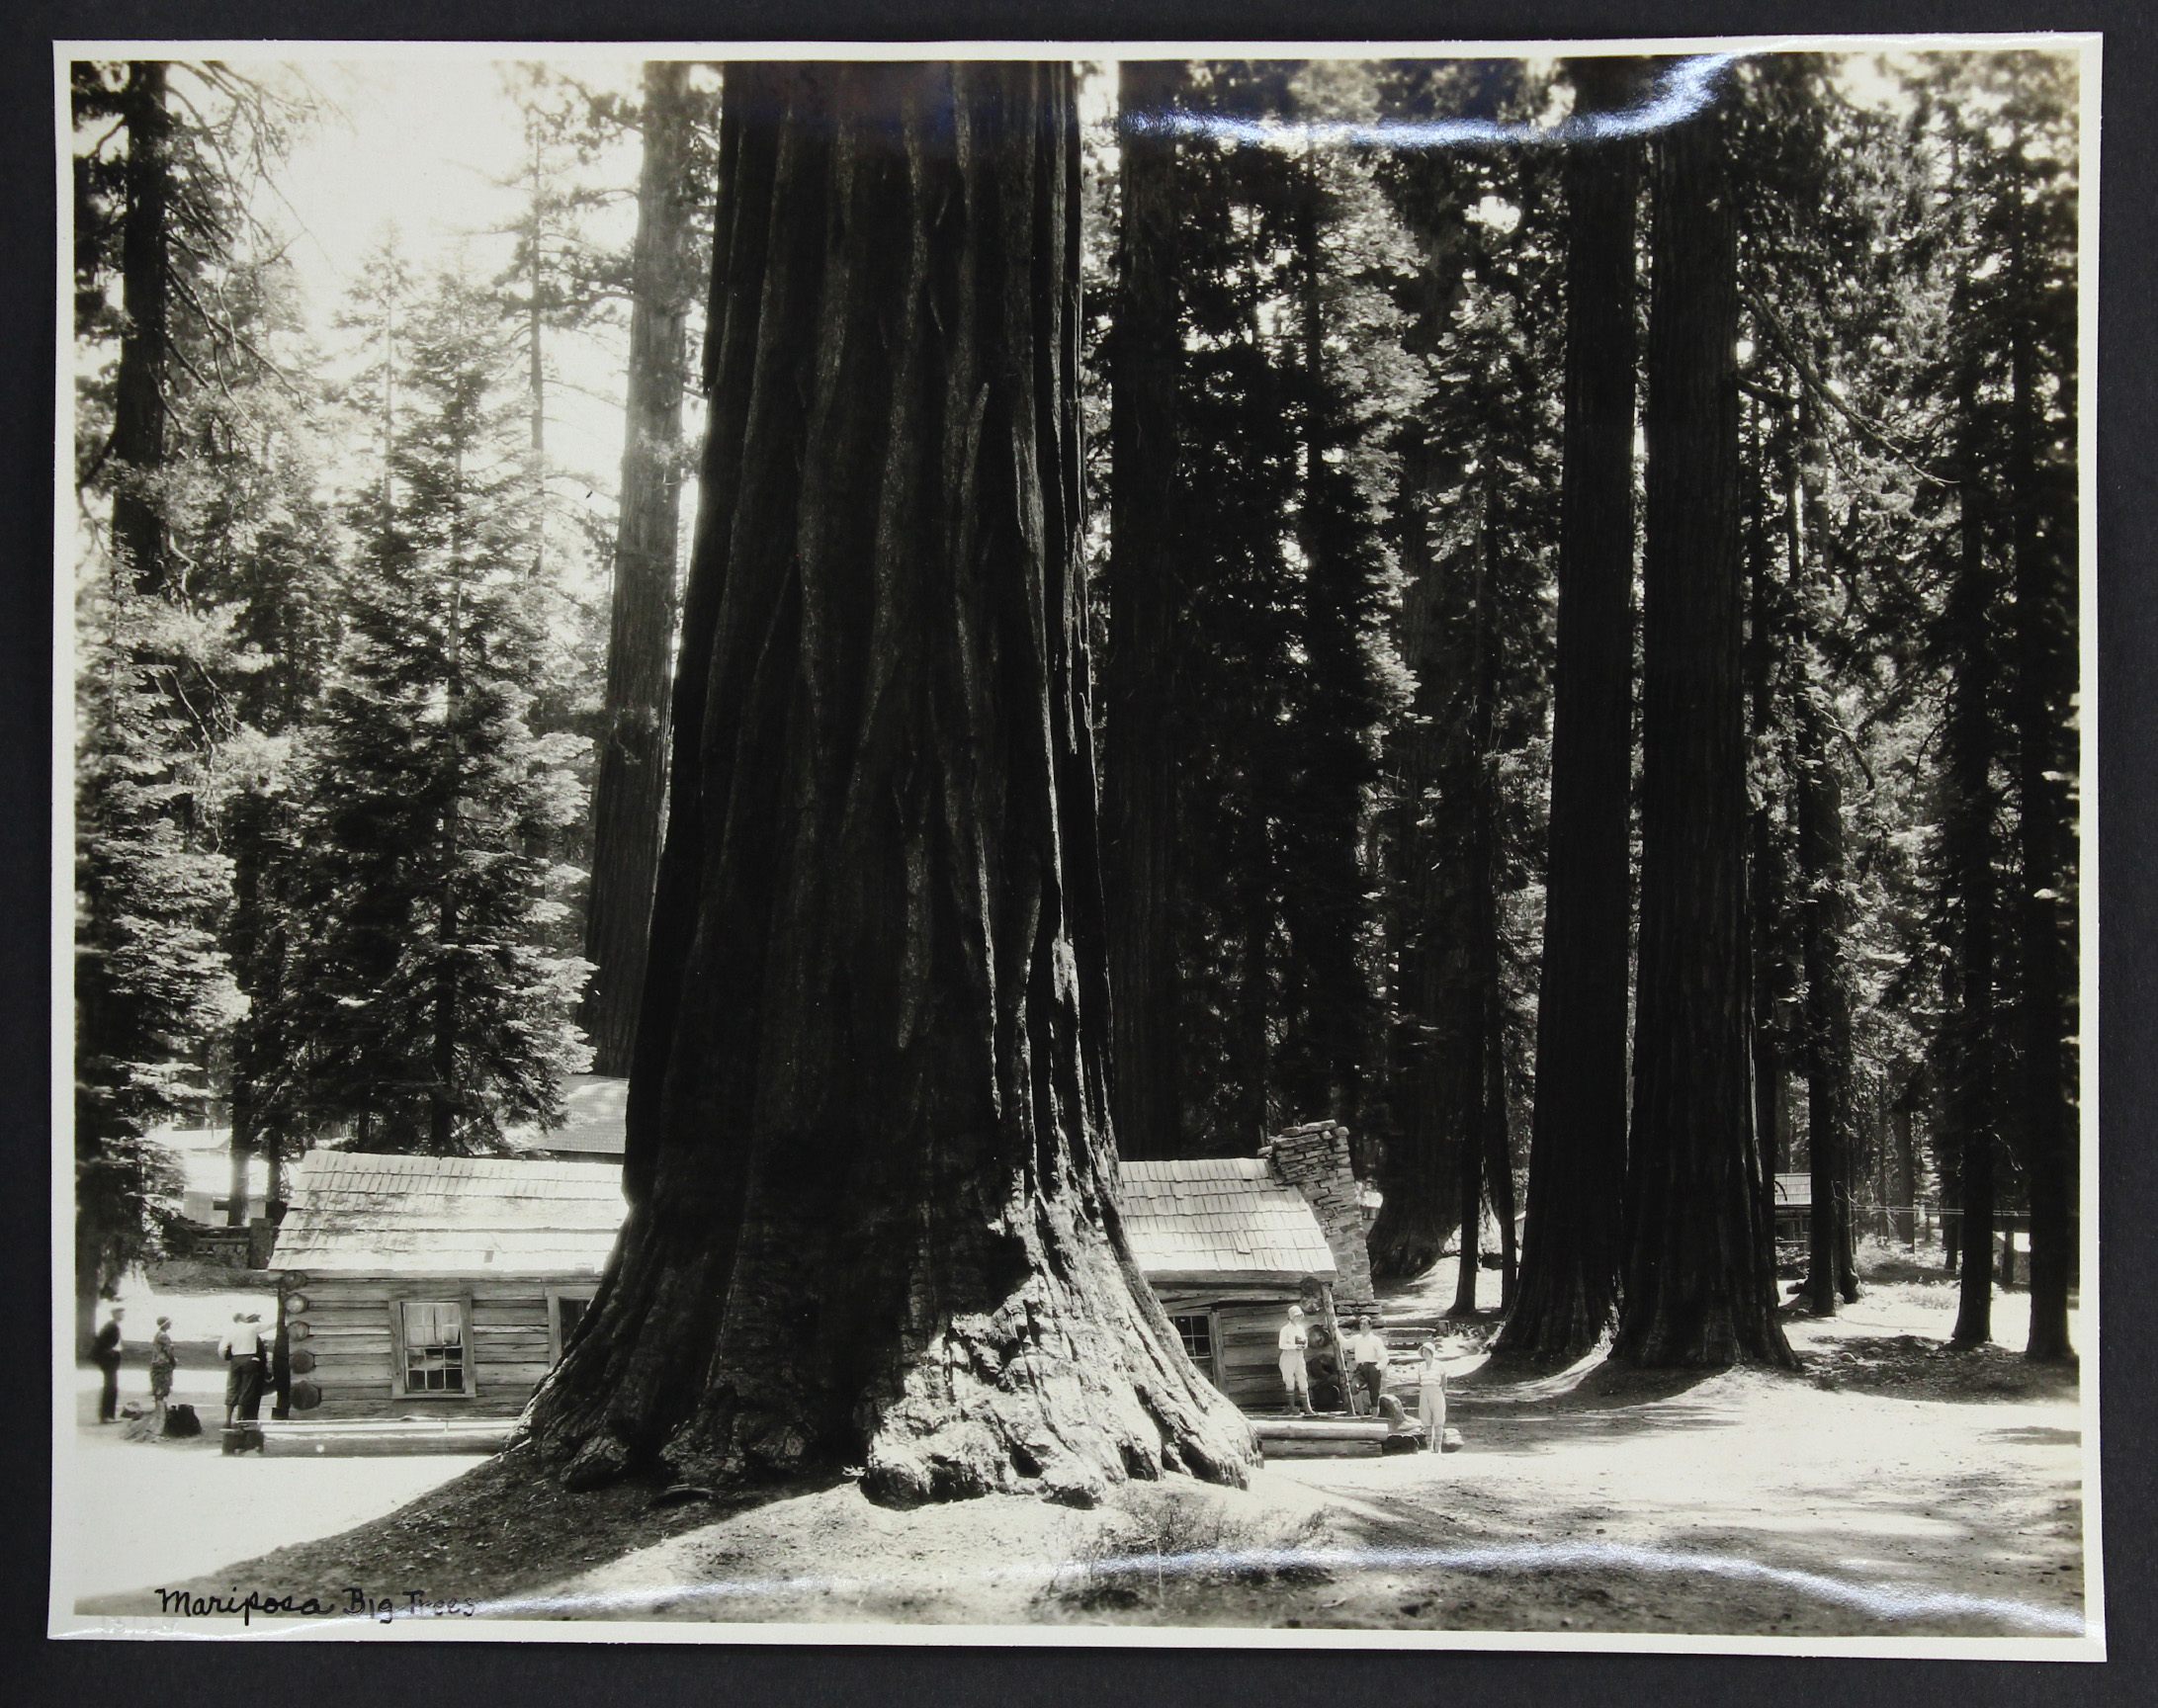 Original Vintage Photo Big Sequoia Trees Photography Old photo Photograph Snapshot Found Photograph Tiny Woman